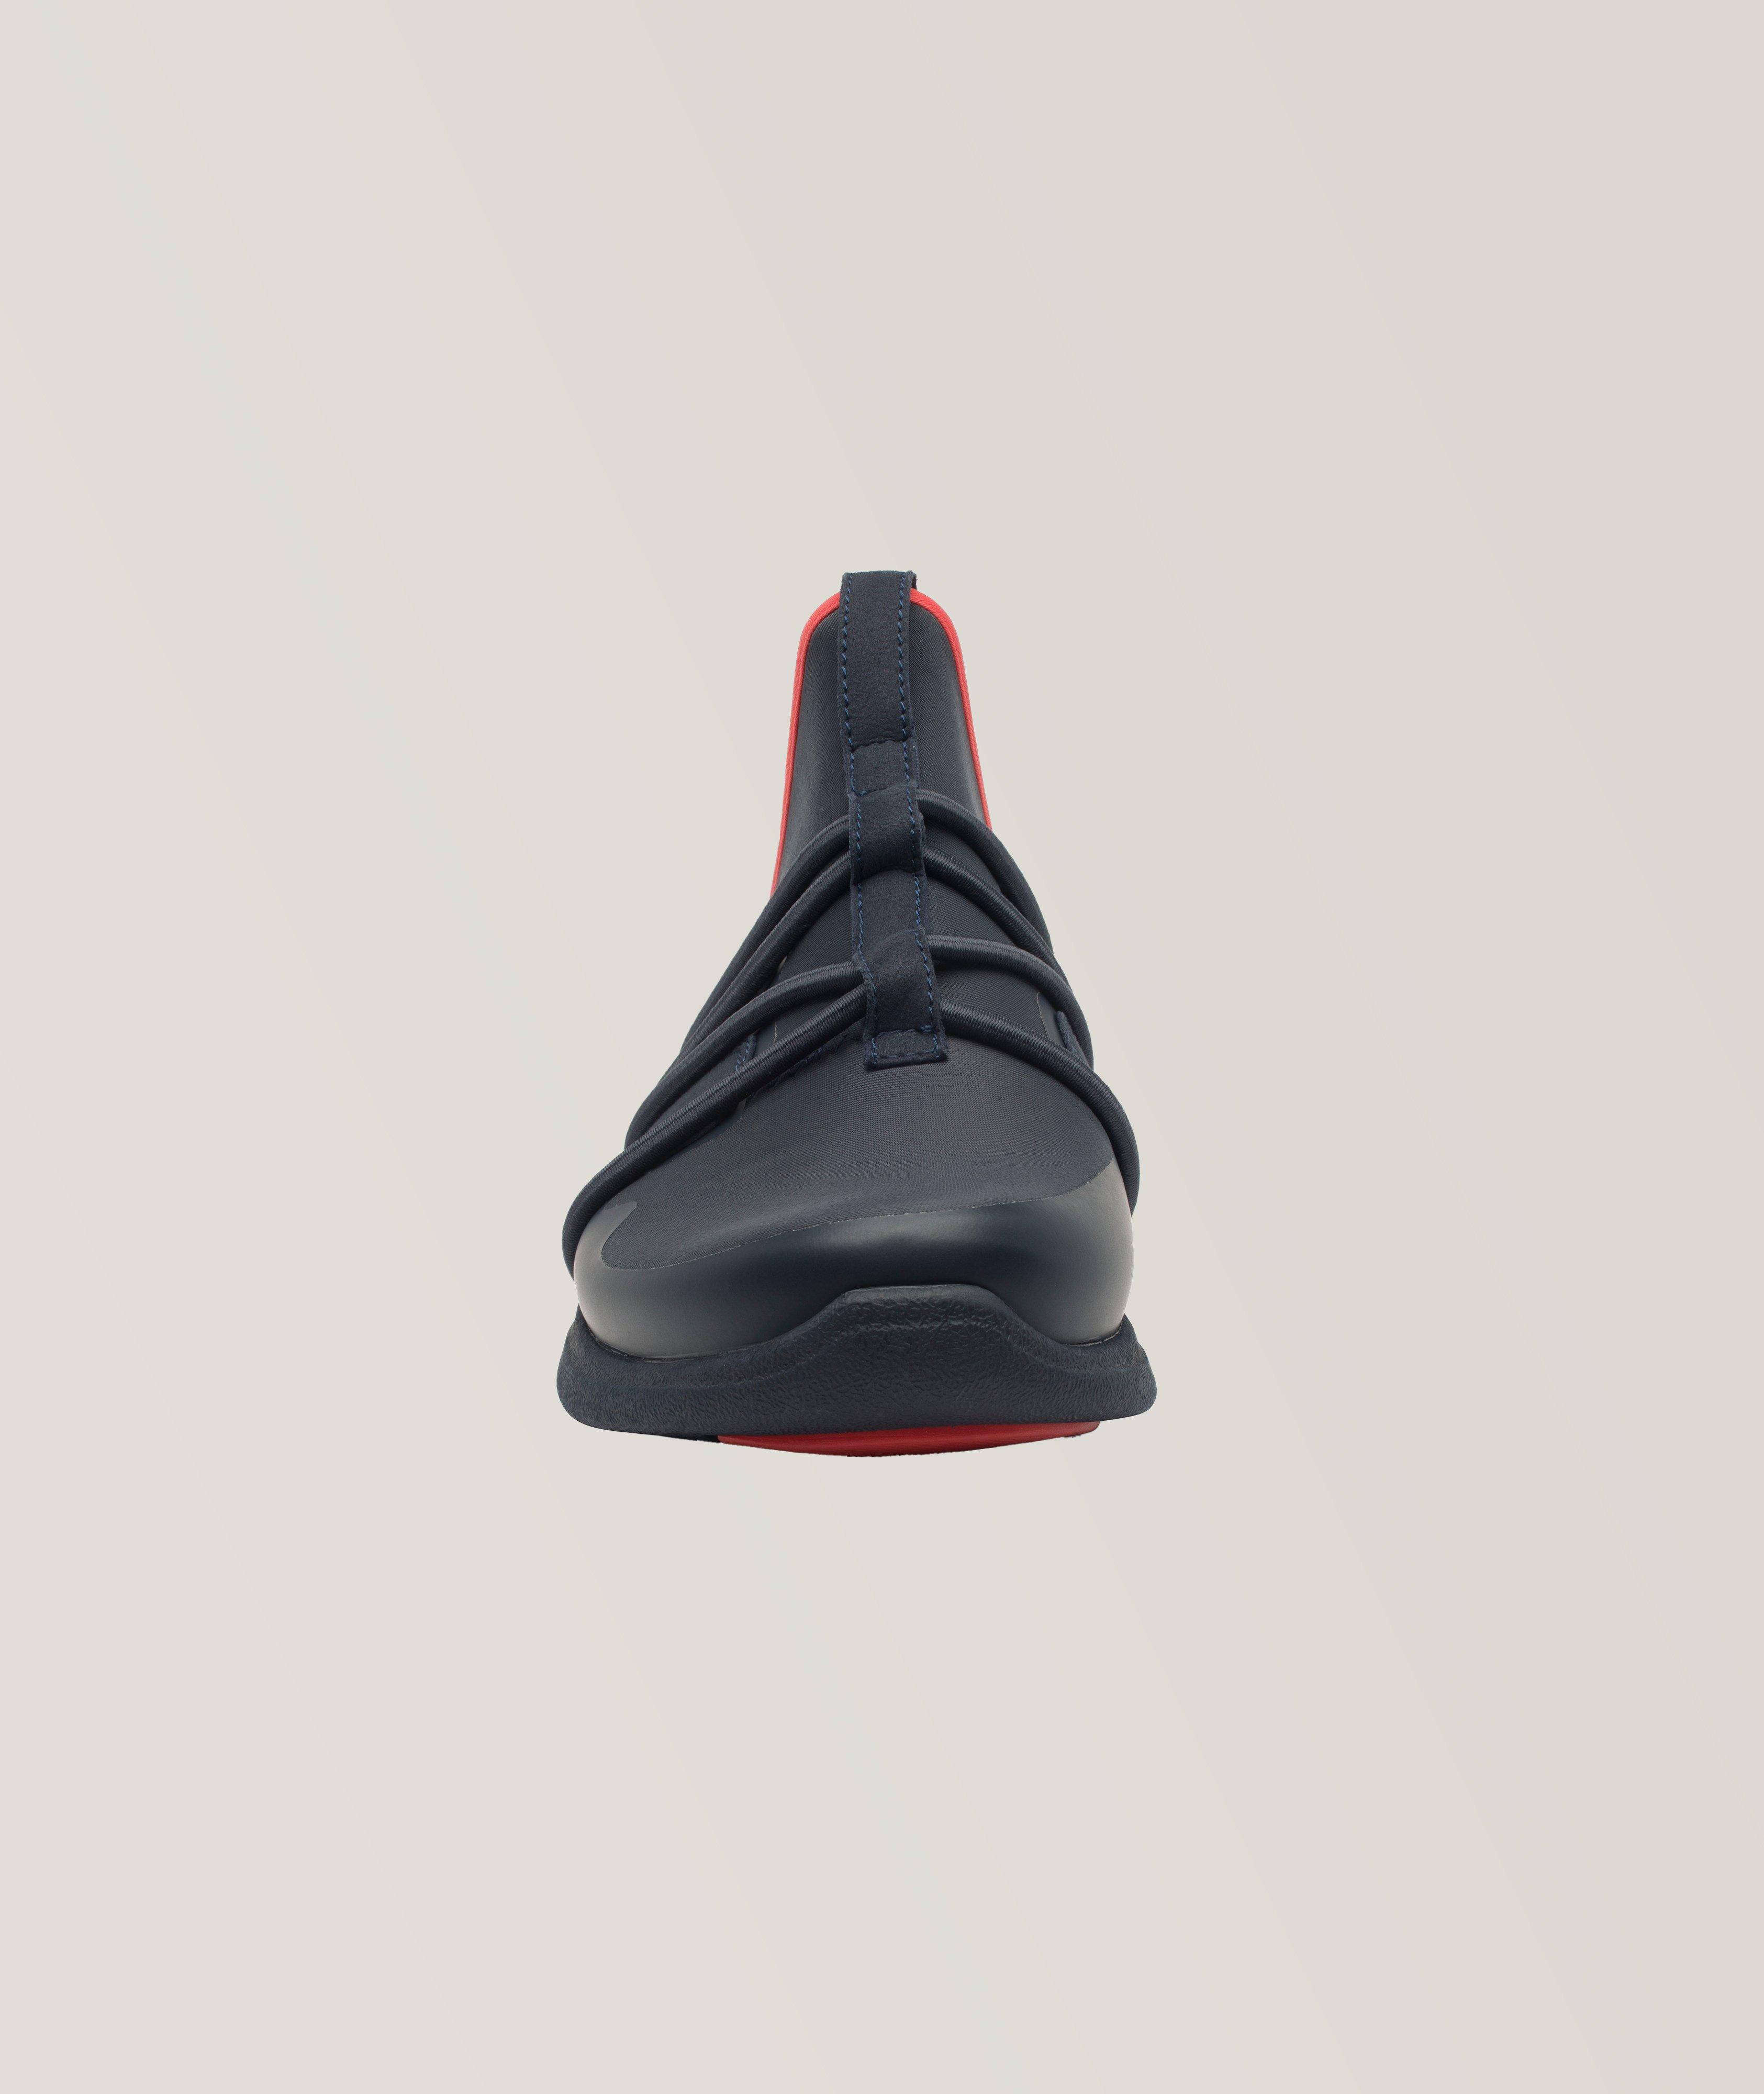 The Rbutus EL 2.0 Slip On Sneakers image 3